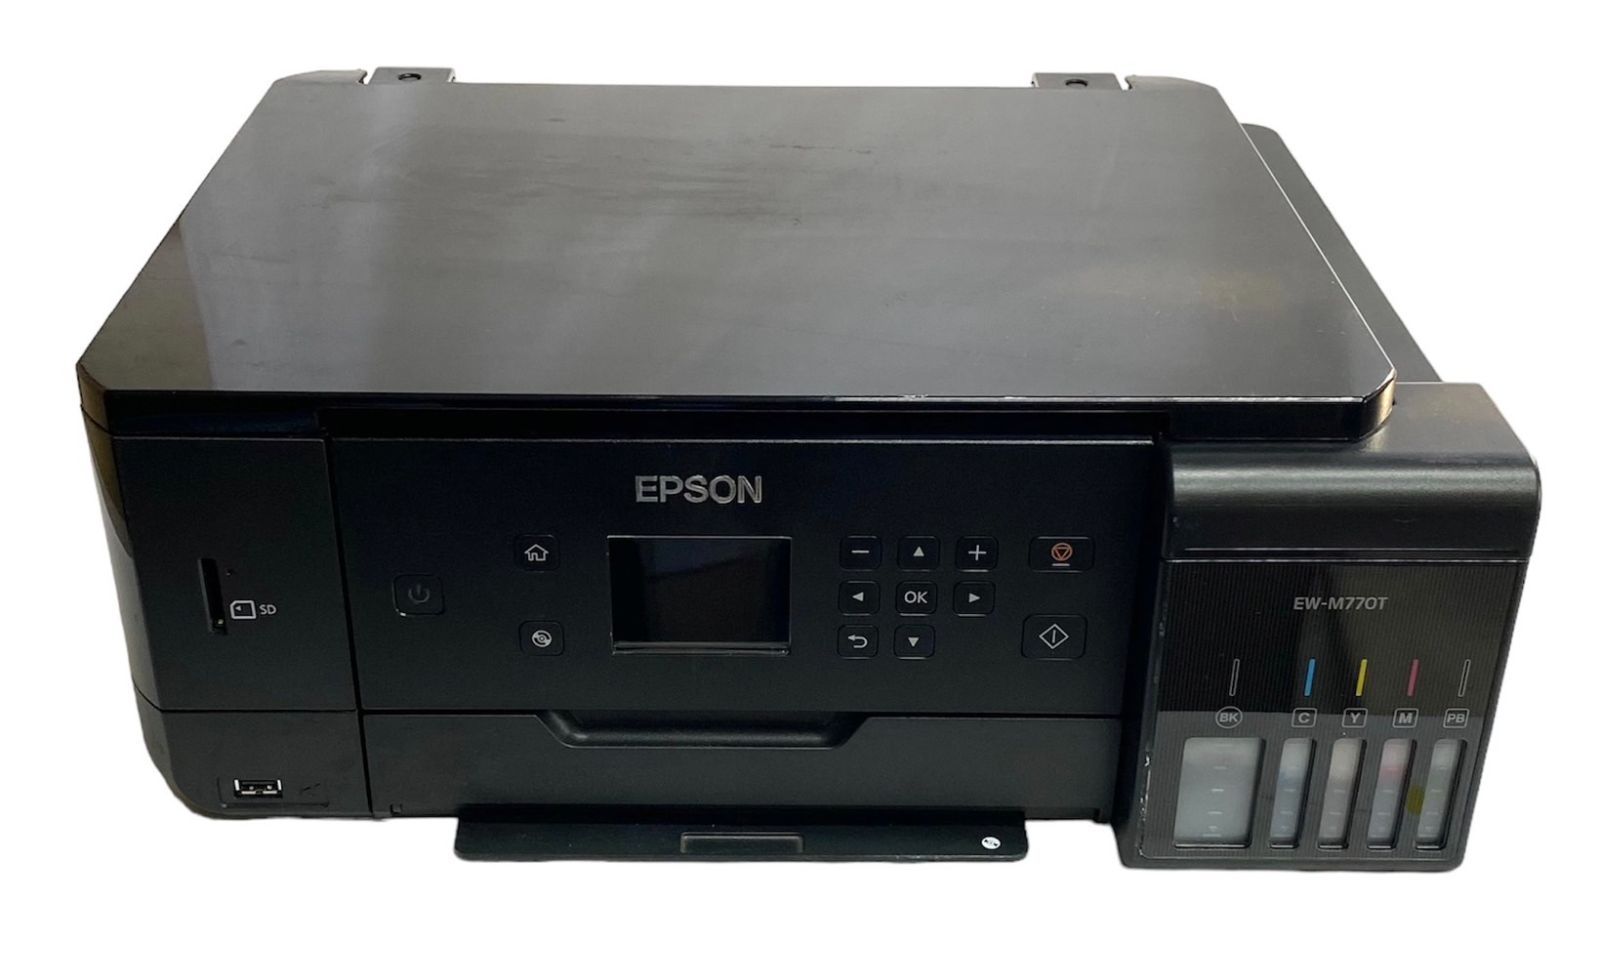 EPSON インクジェットプリンター EW-M770T - 周辺機器